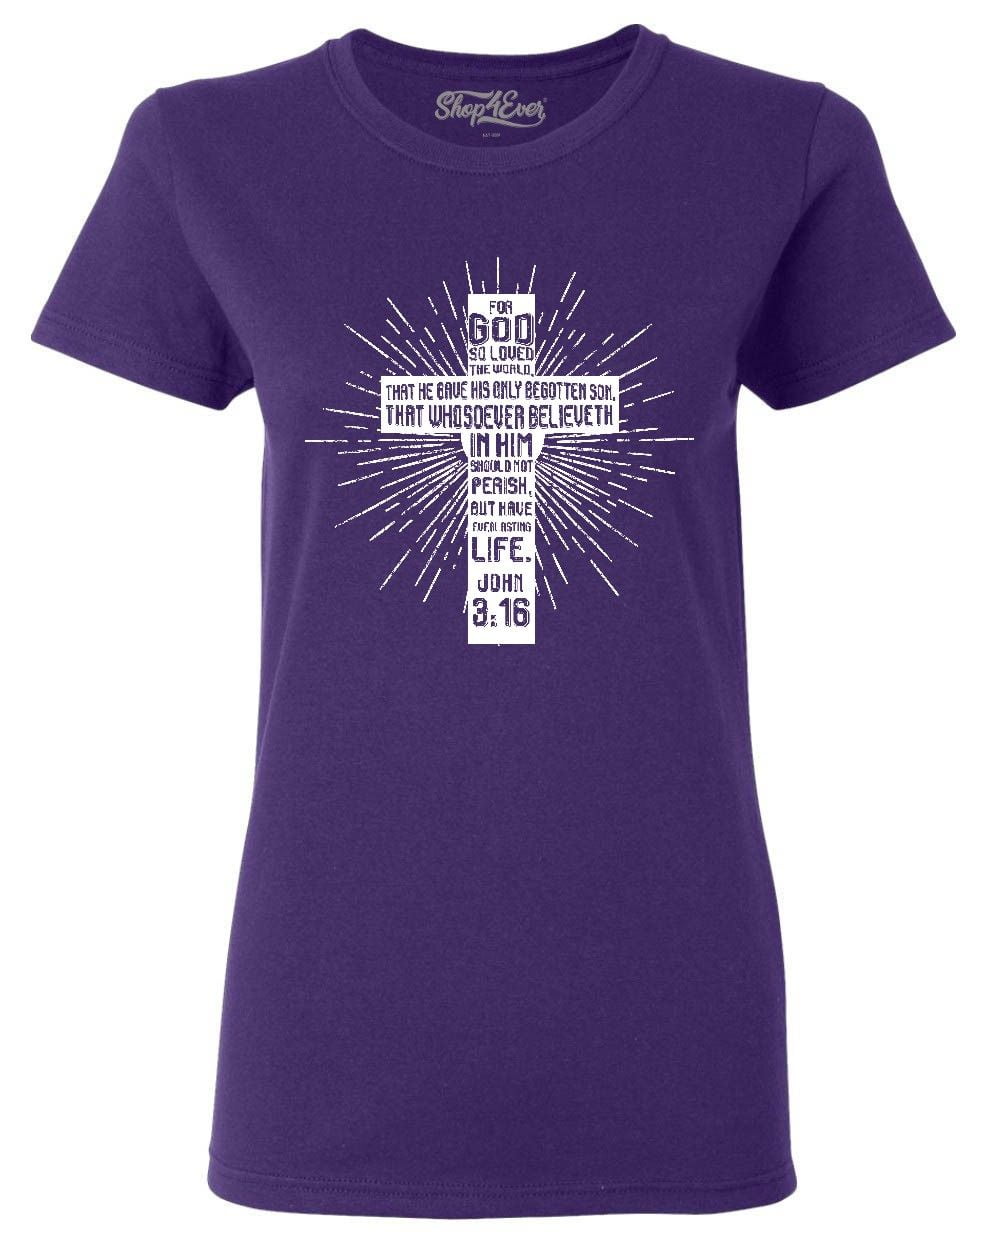 Shop4Ever Women's John 3:16 Cross Graphic T-Shirt X-Large Purple ...